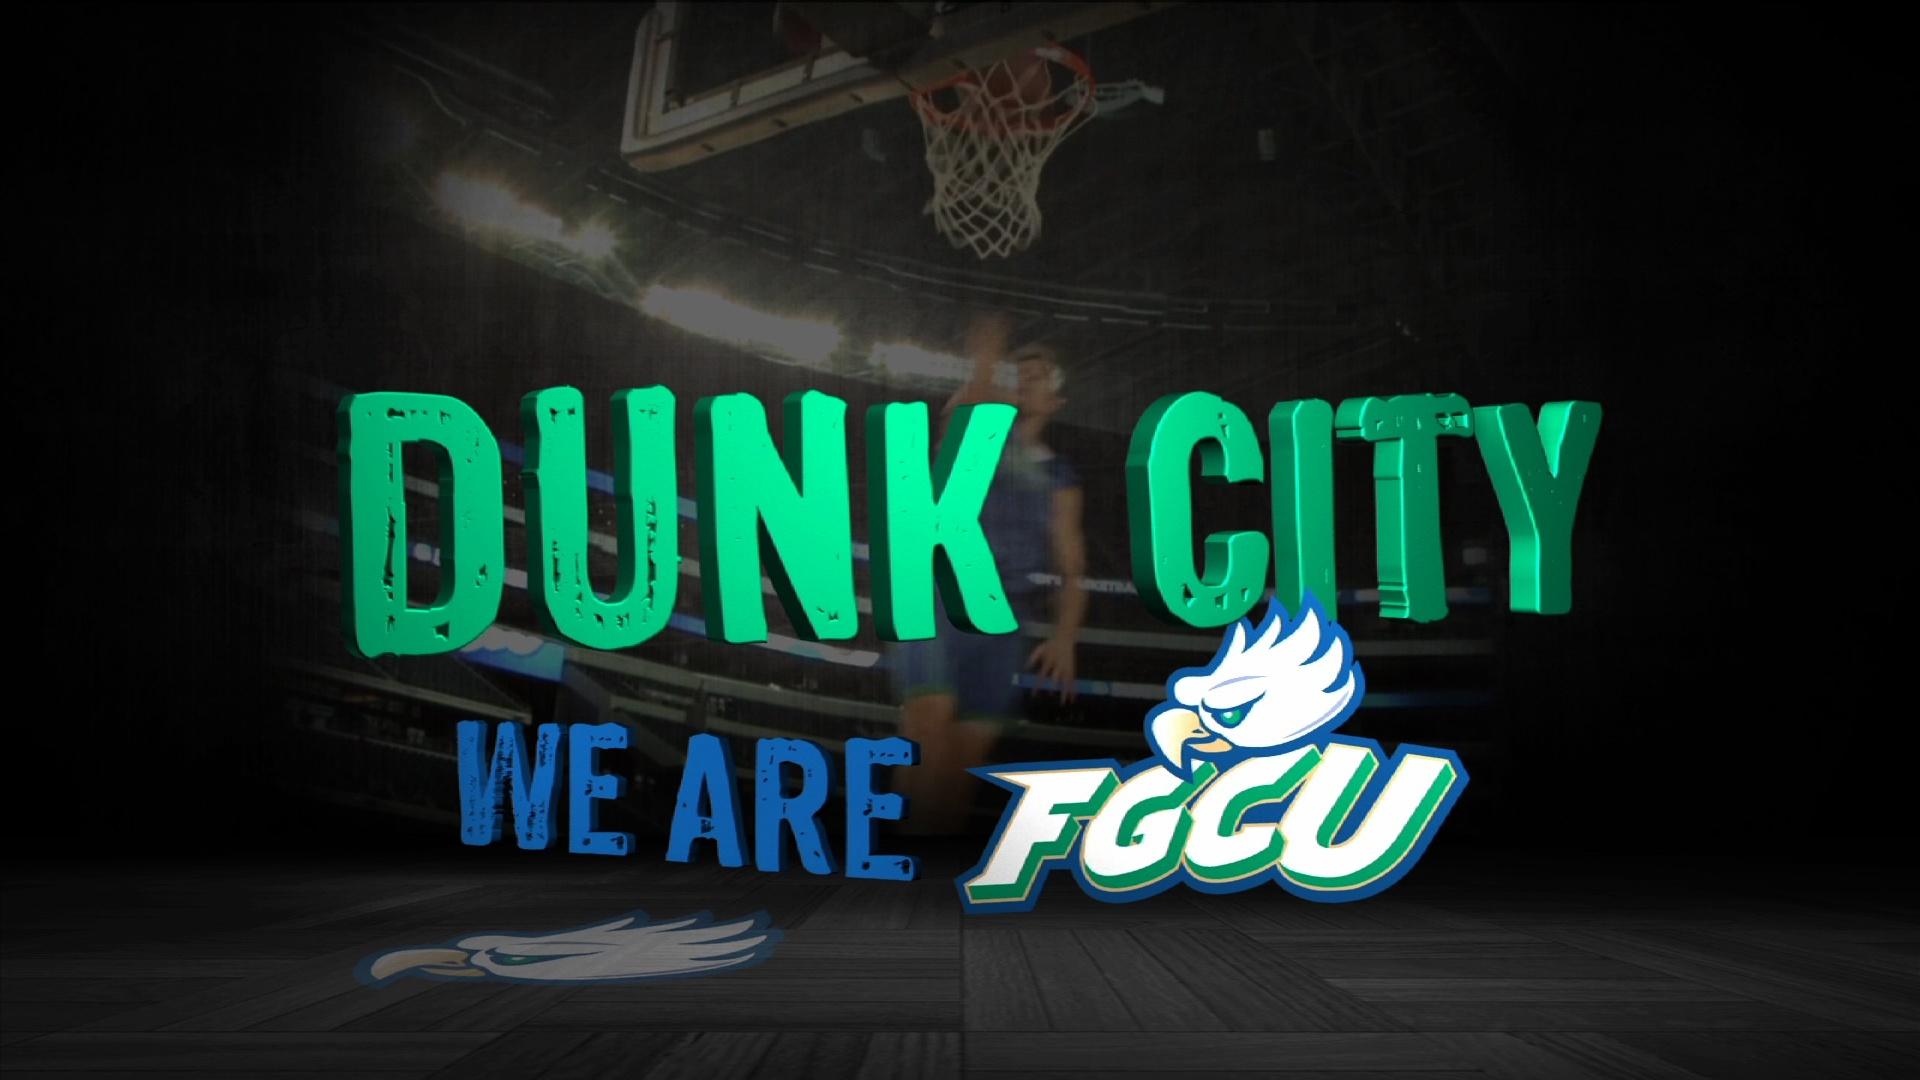 Wgcu Presents Dunk City We Are Fgcu Pbs